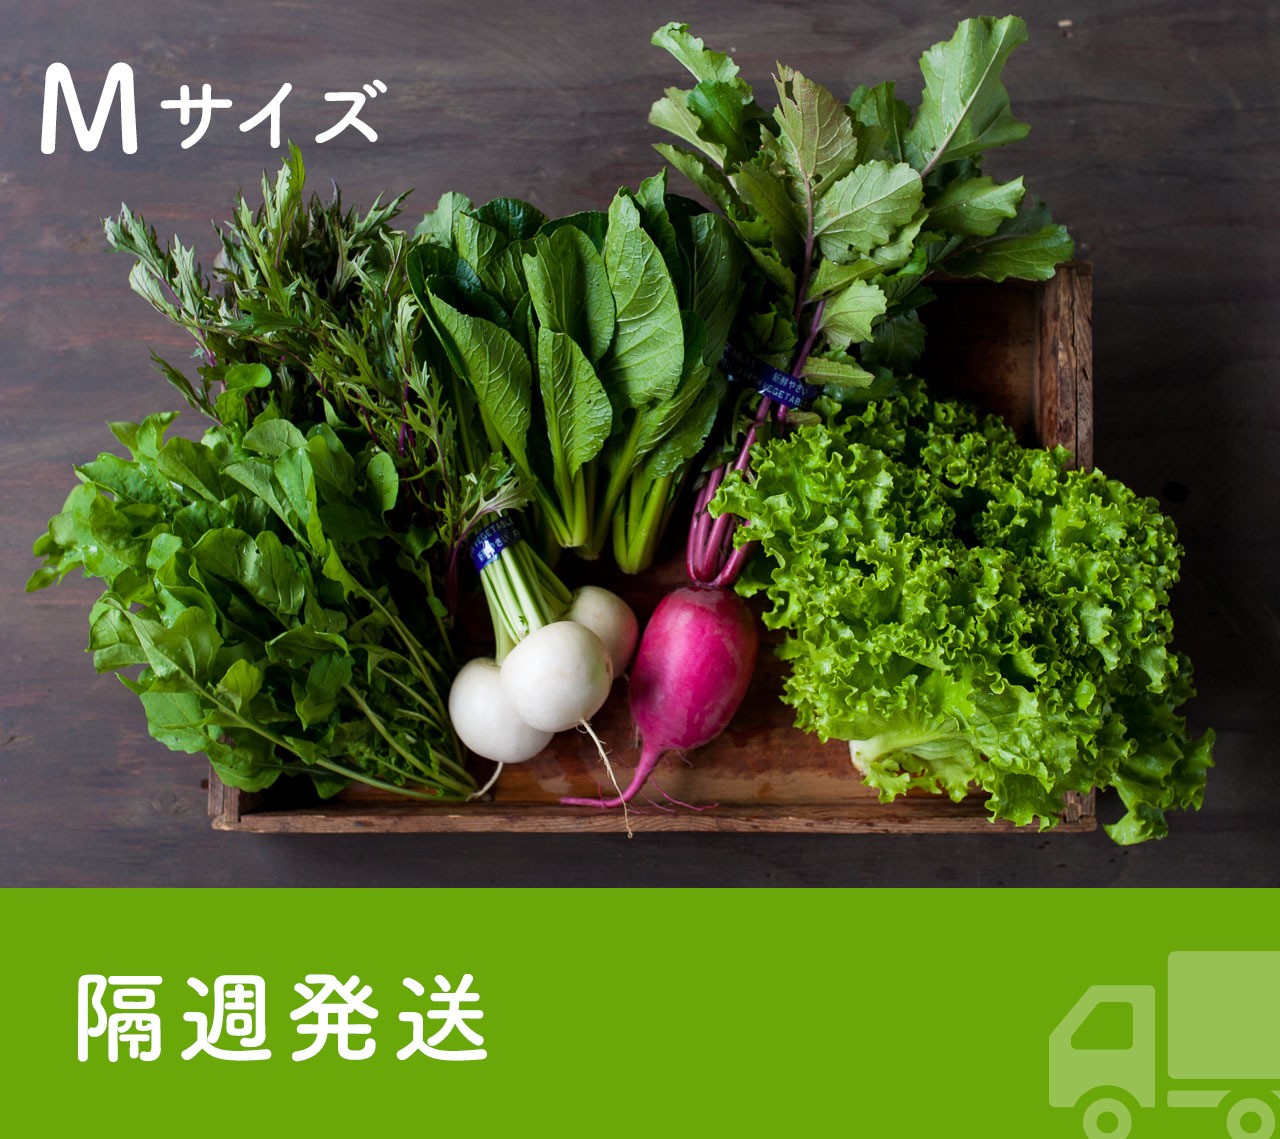 《隔週発送》FIO野菜-定期便 Mサイズ